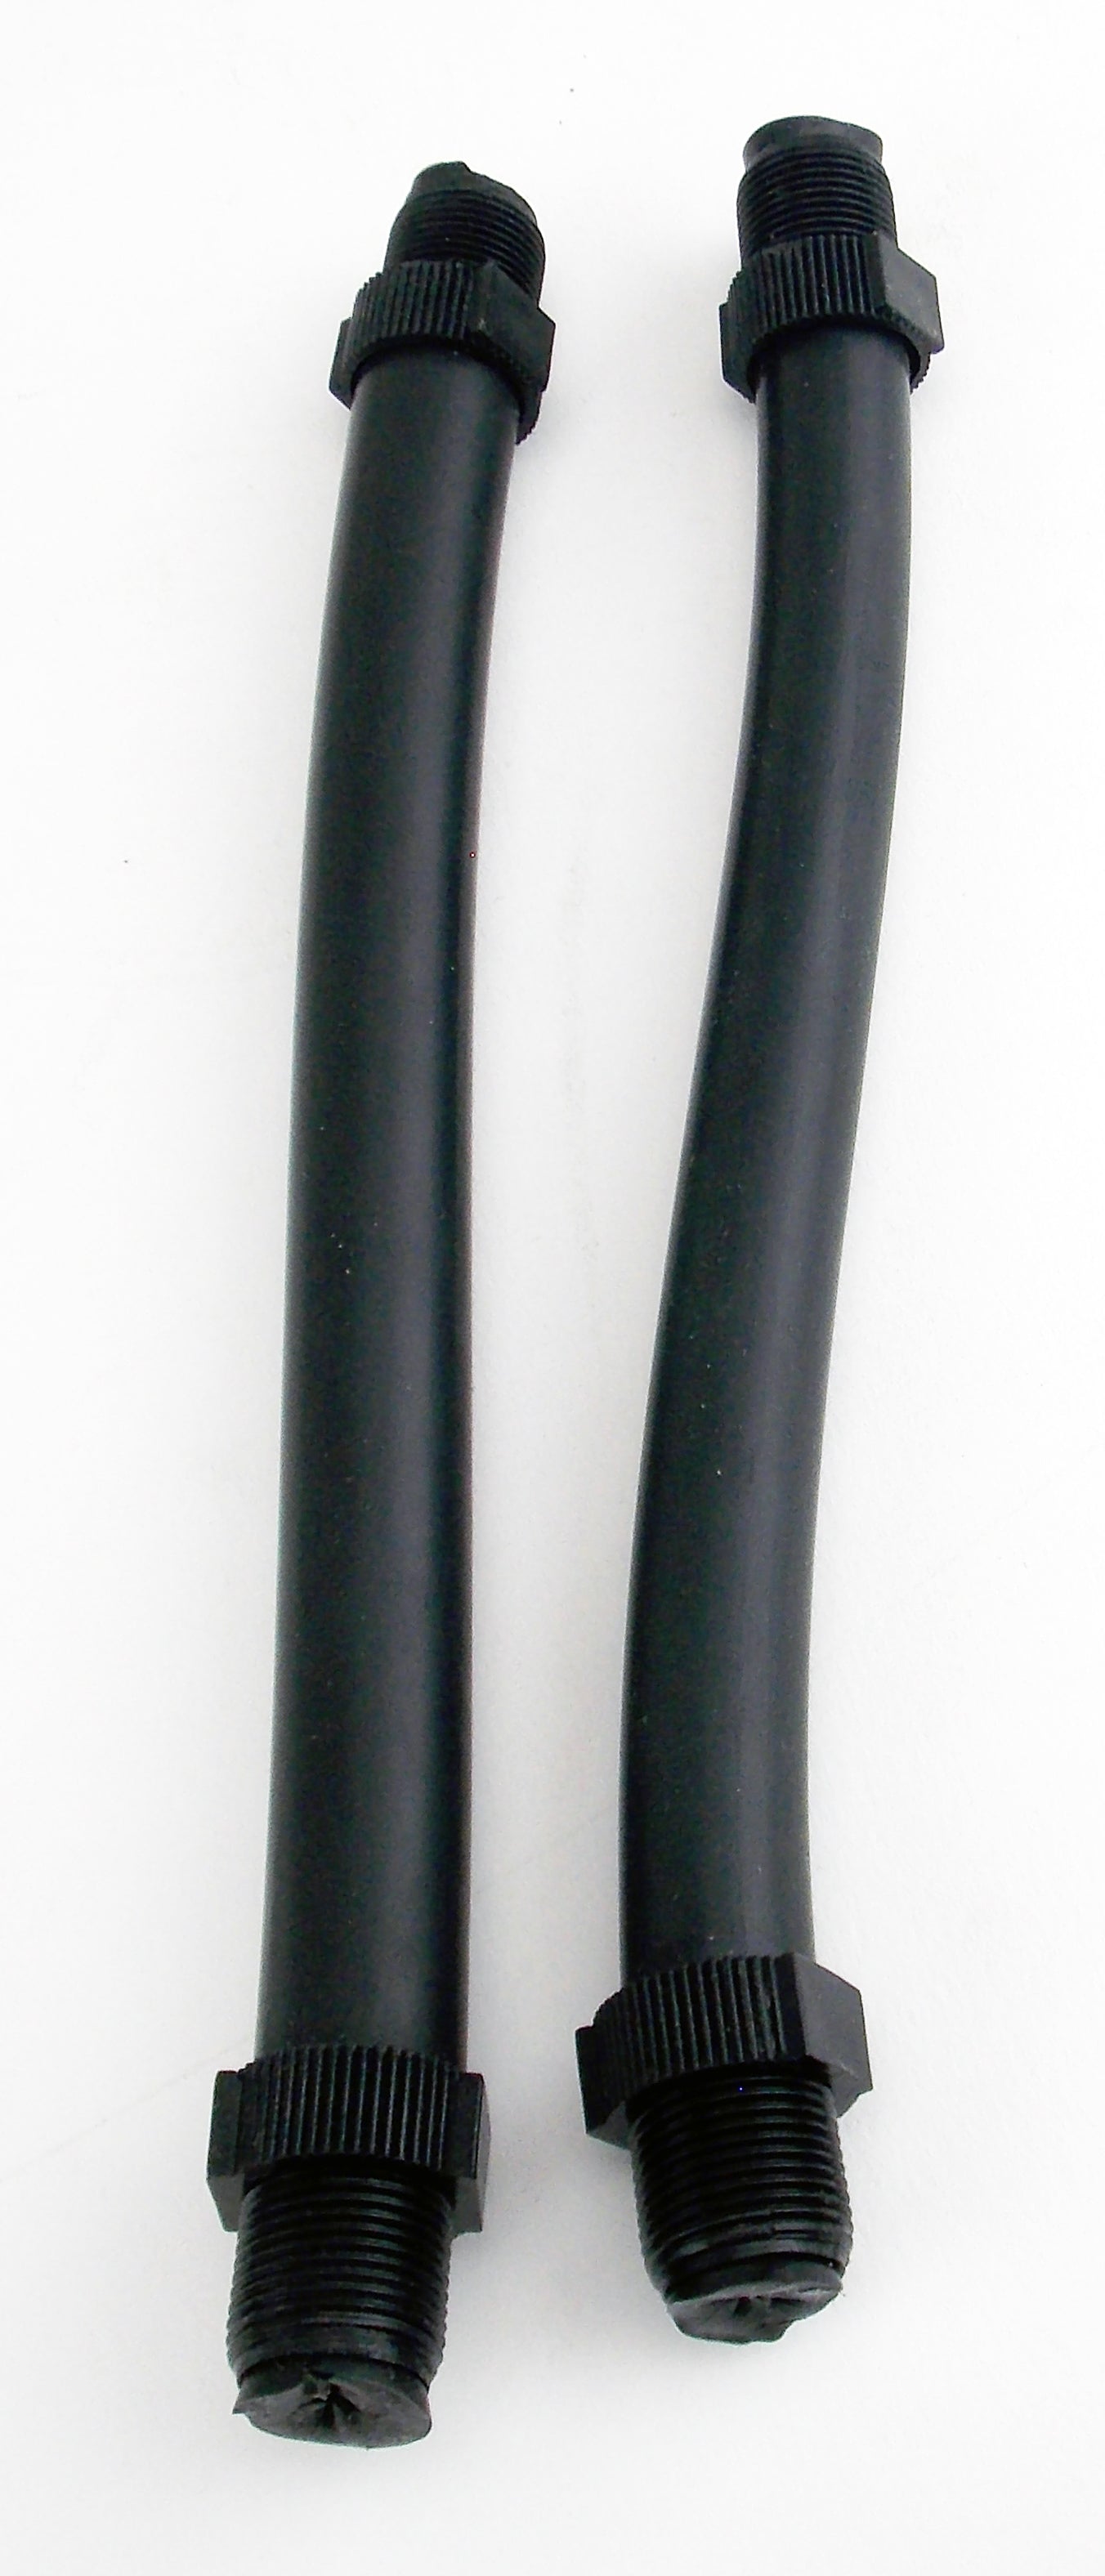 Drophog Ambush Latex Euro Style Power Bands - 14mm (9/16") Diameter - Pair